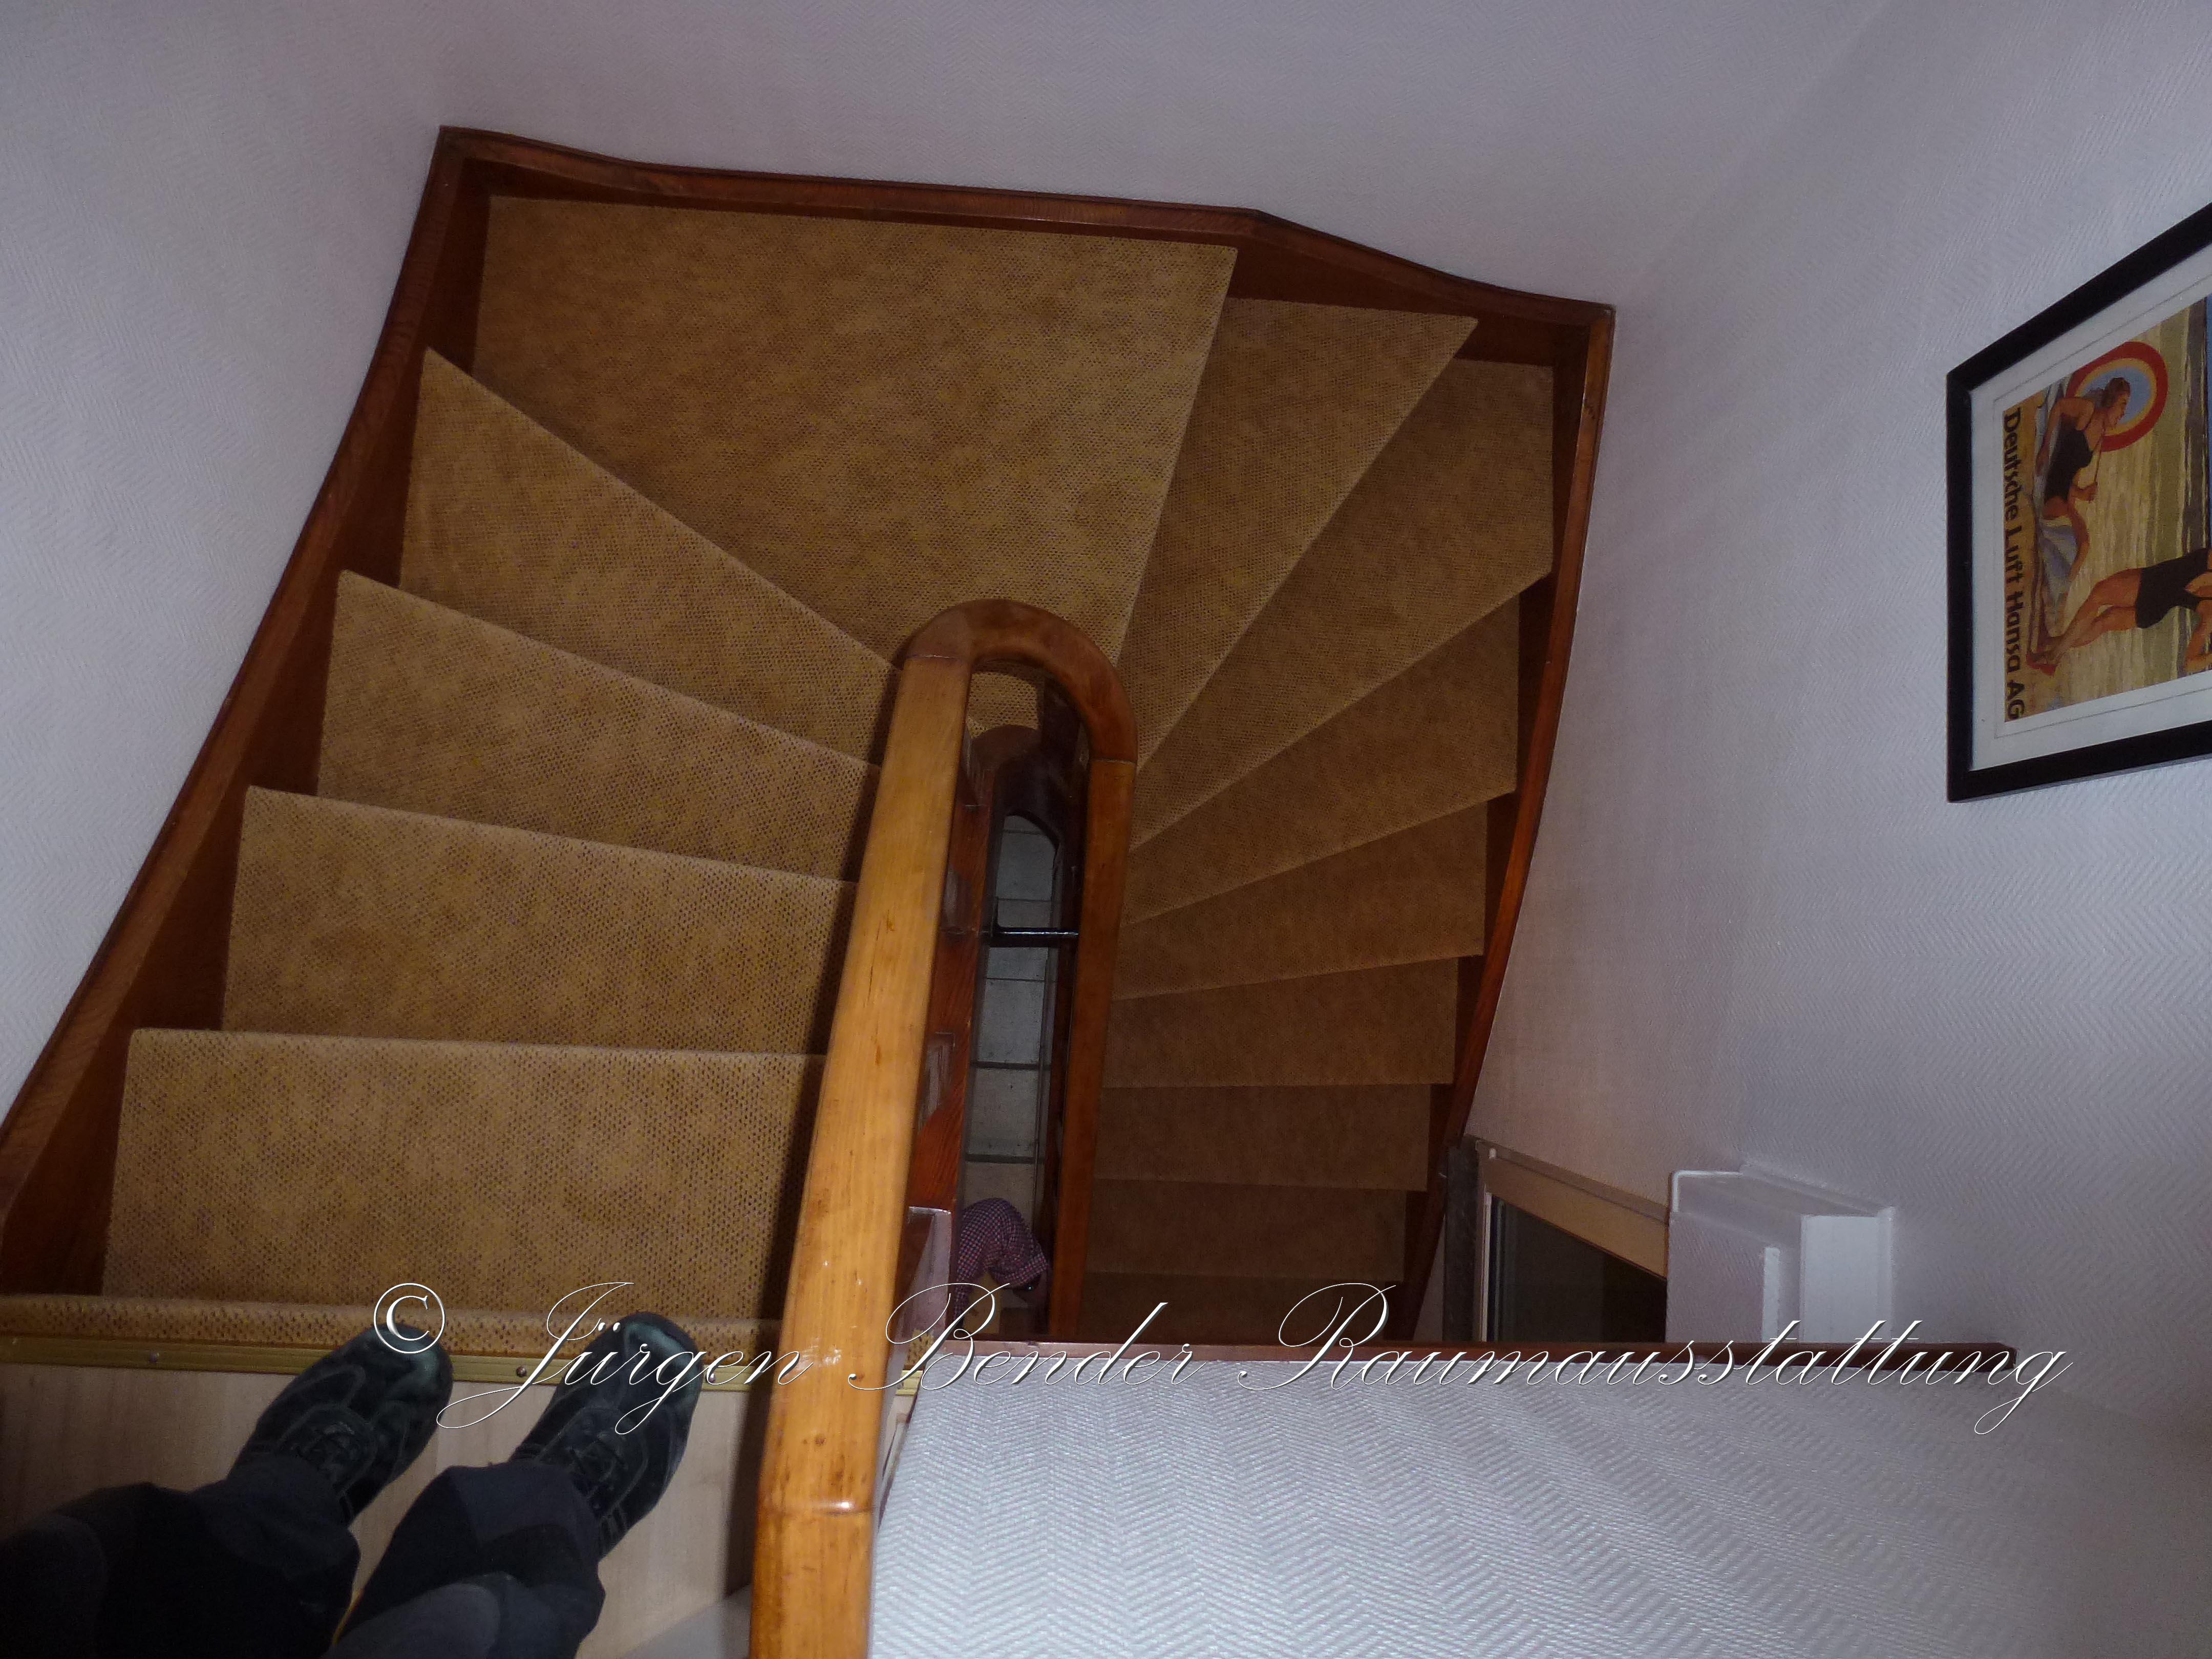 Treppenbelag Teppichboden #teppichboden ©Jürgen Bender